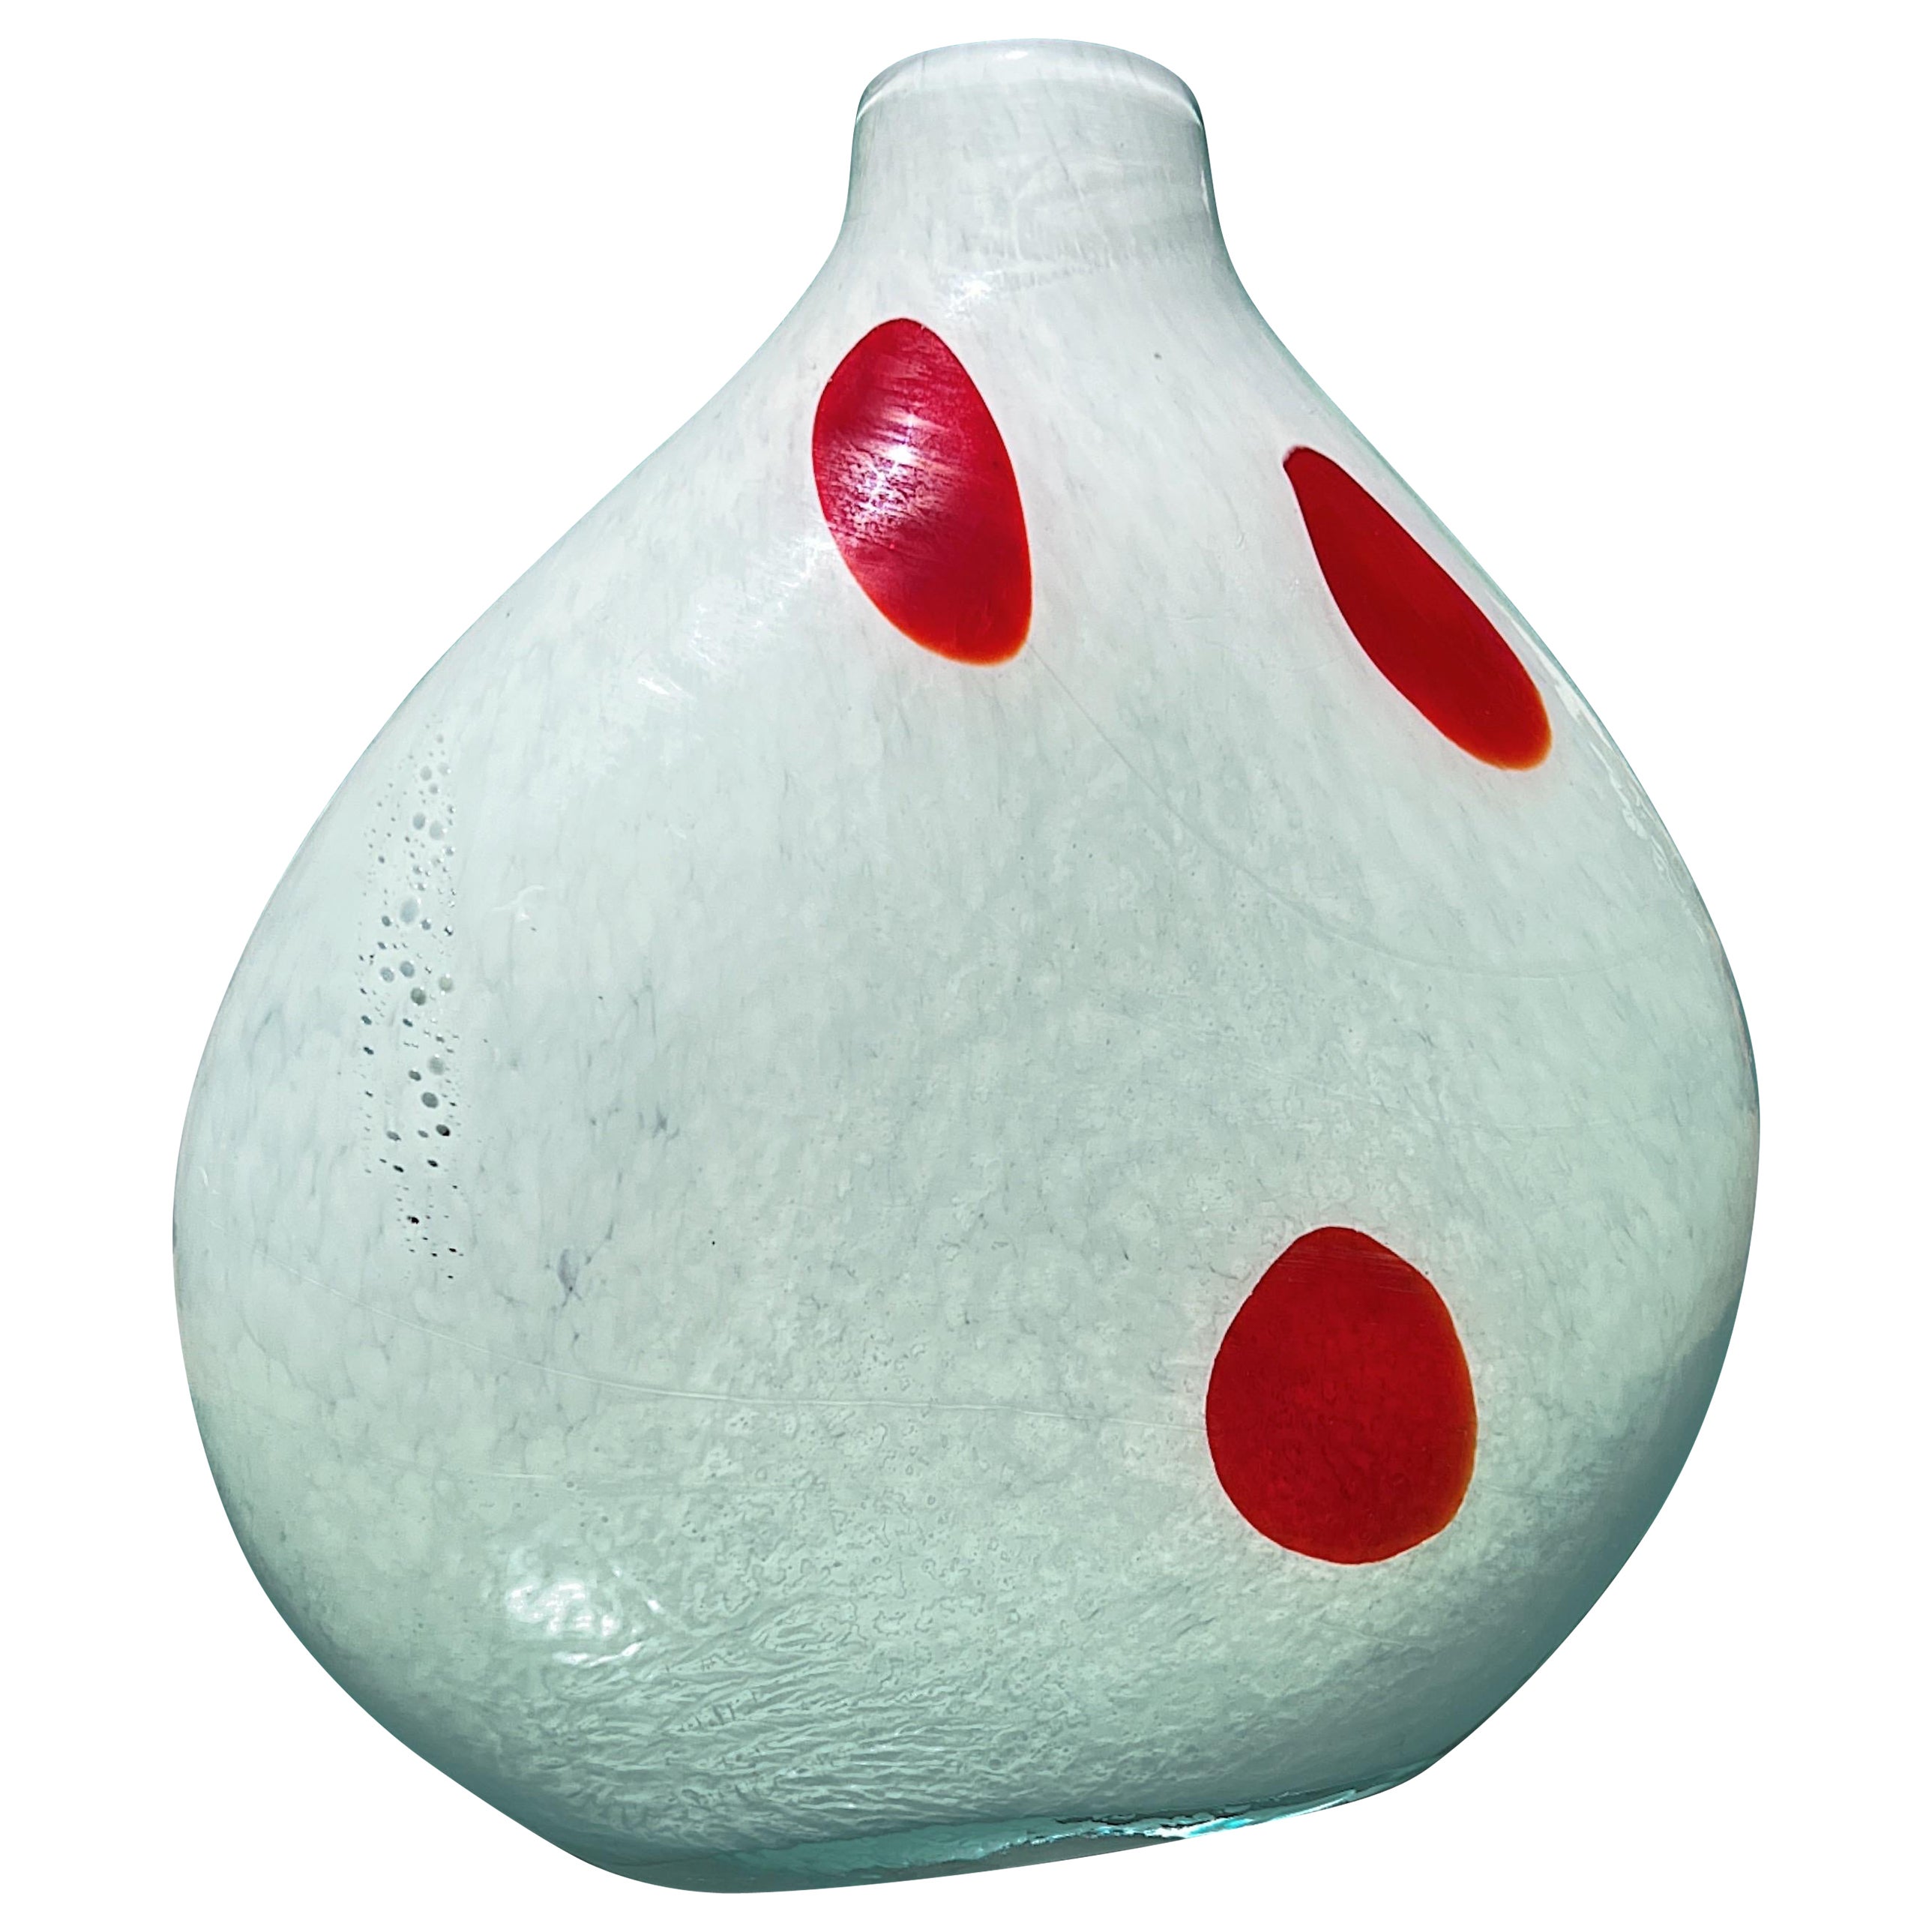 Murano glass vase designed by Dino Martens, 1940